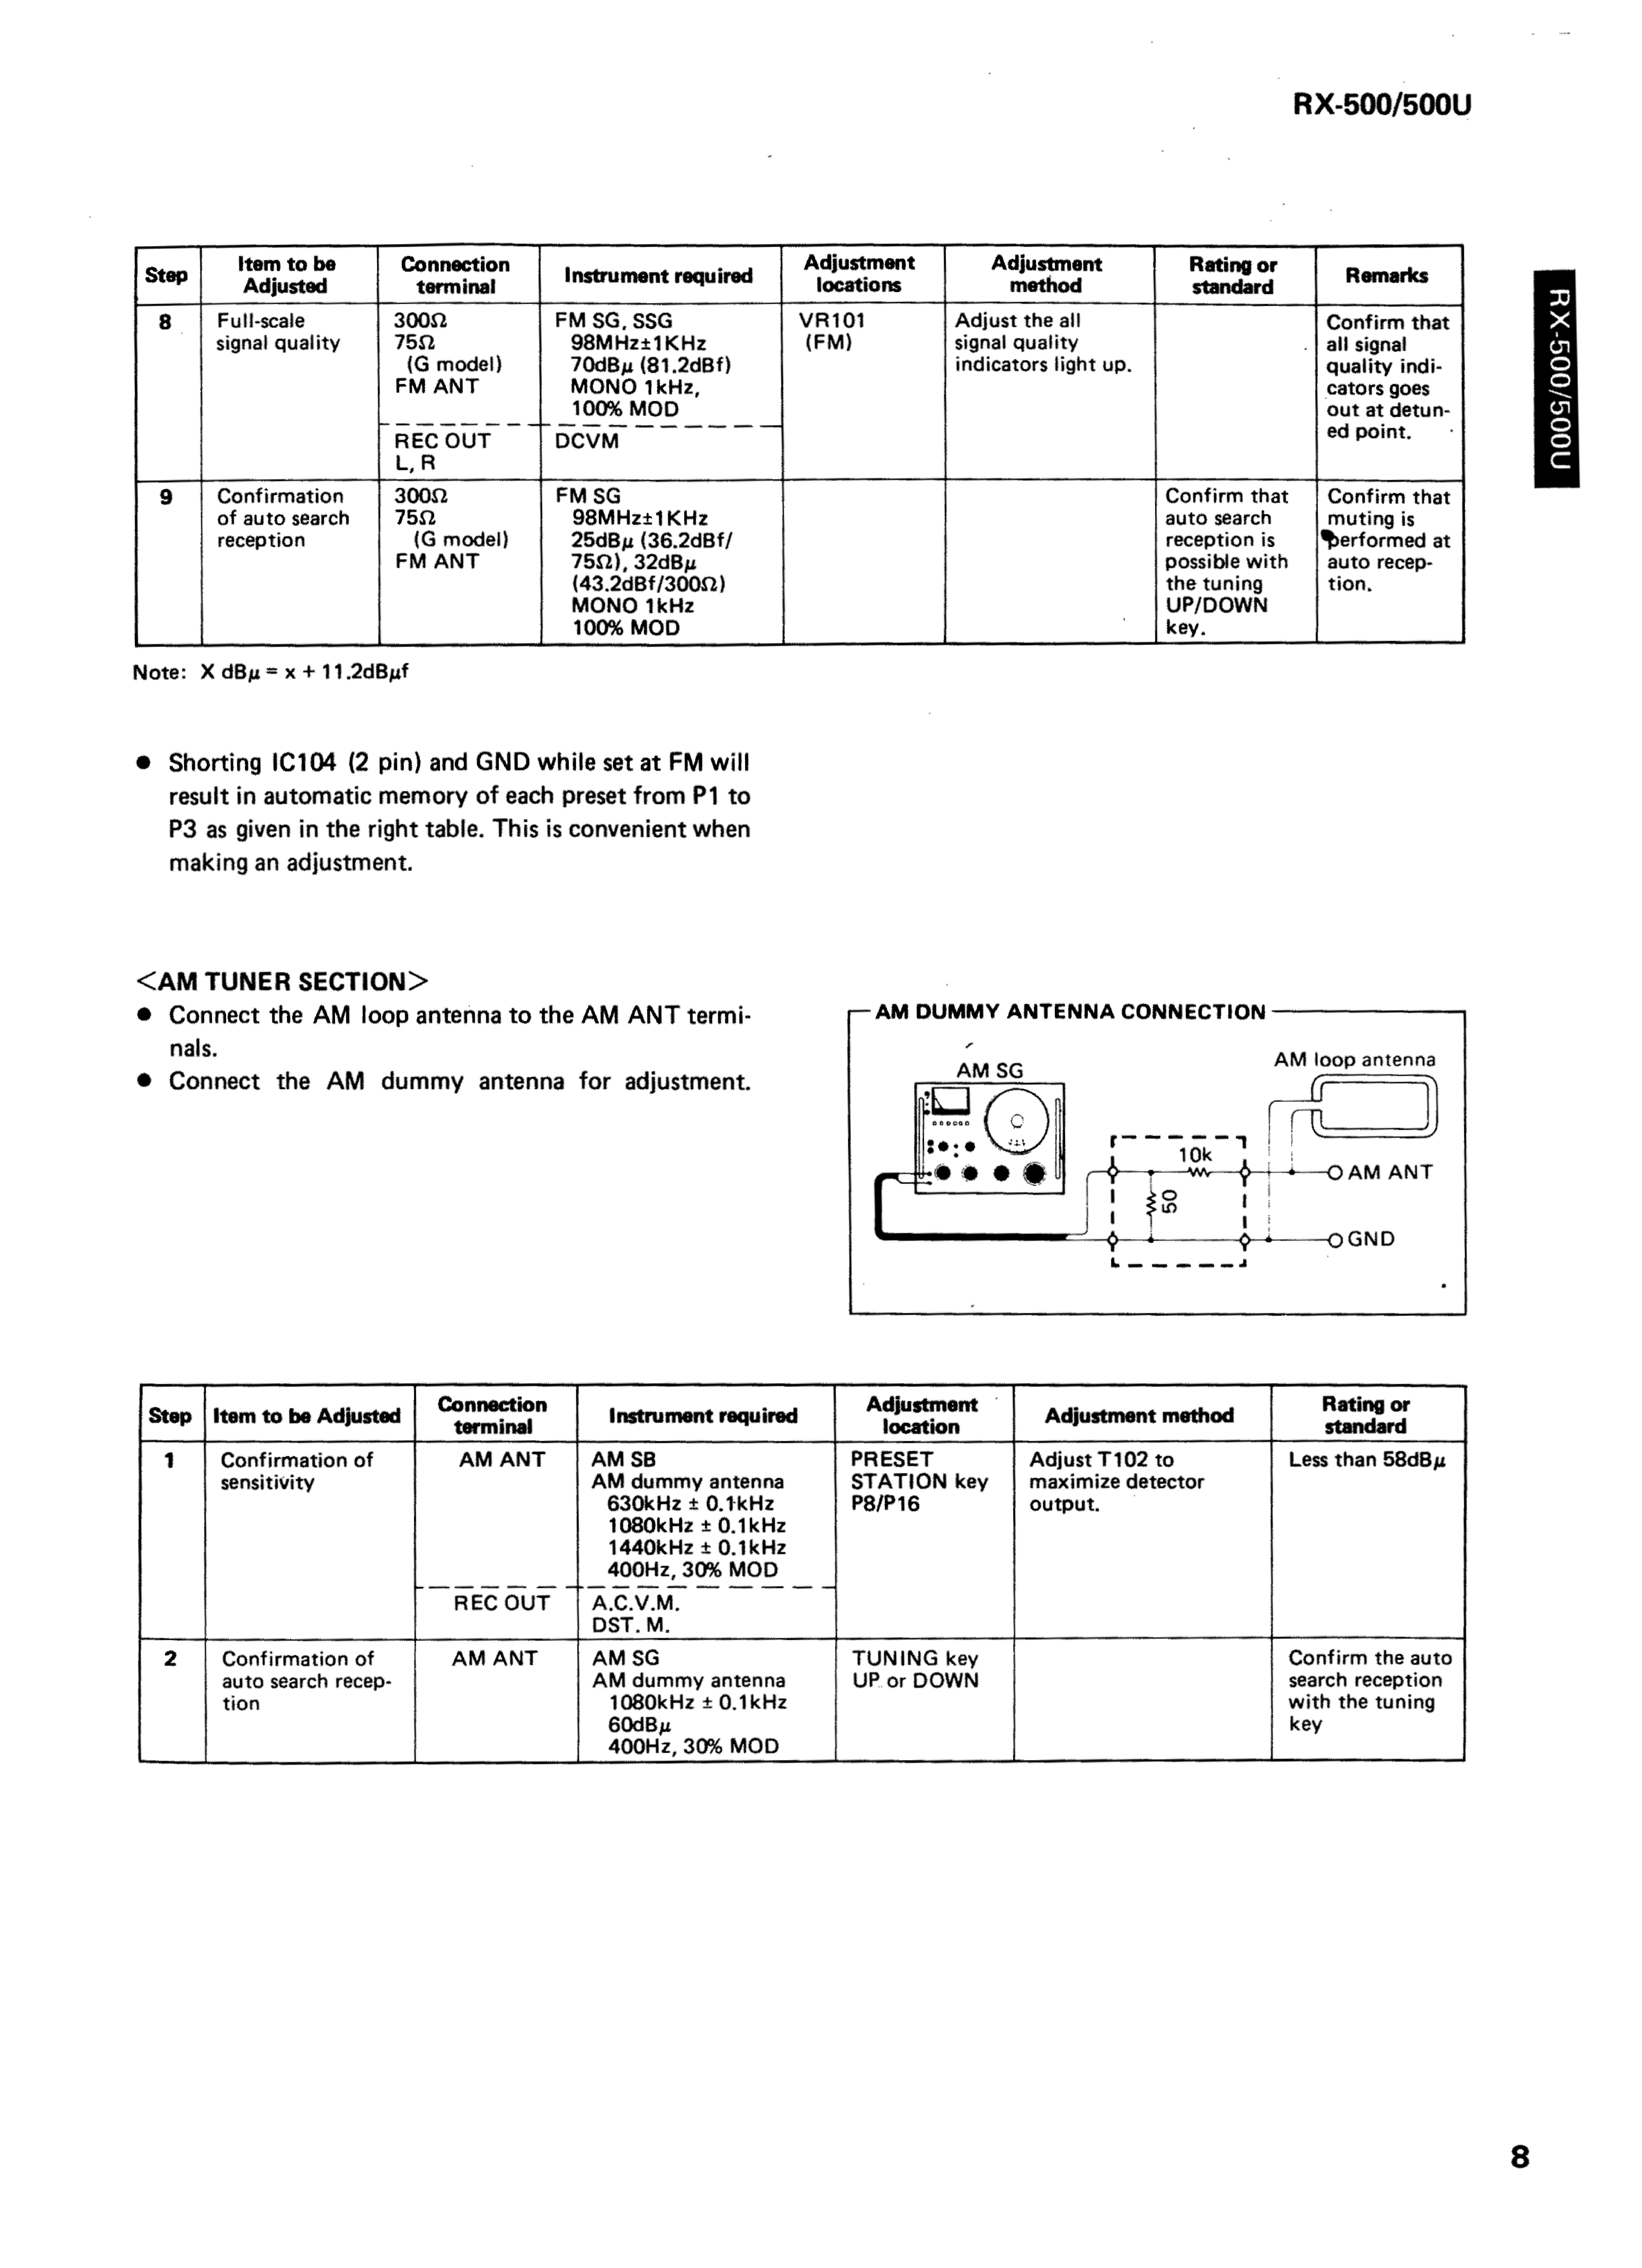 PDF manual for Yamaha Receiver RX-500